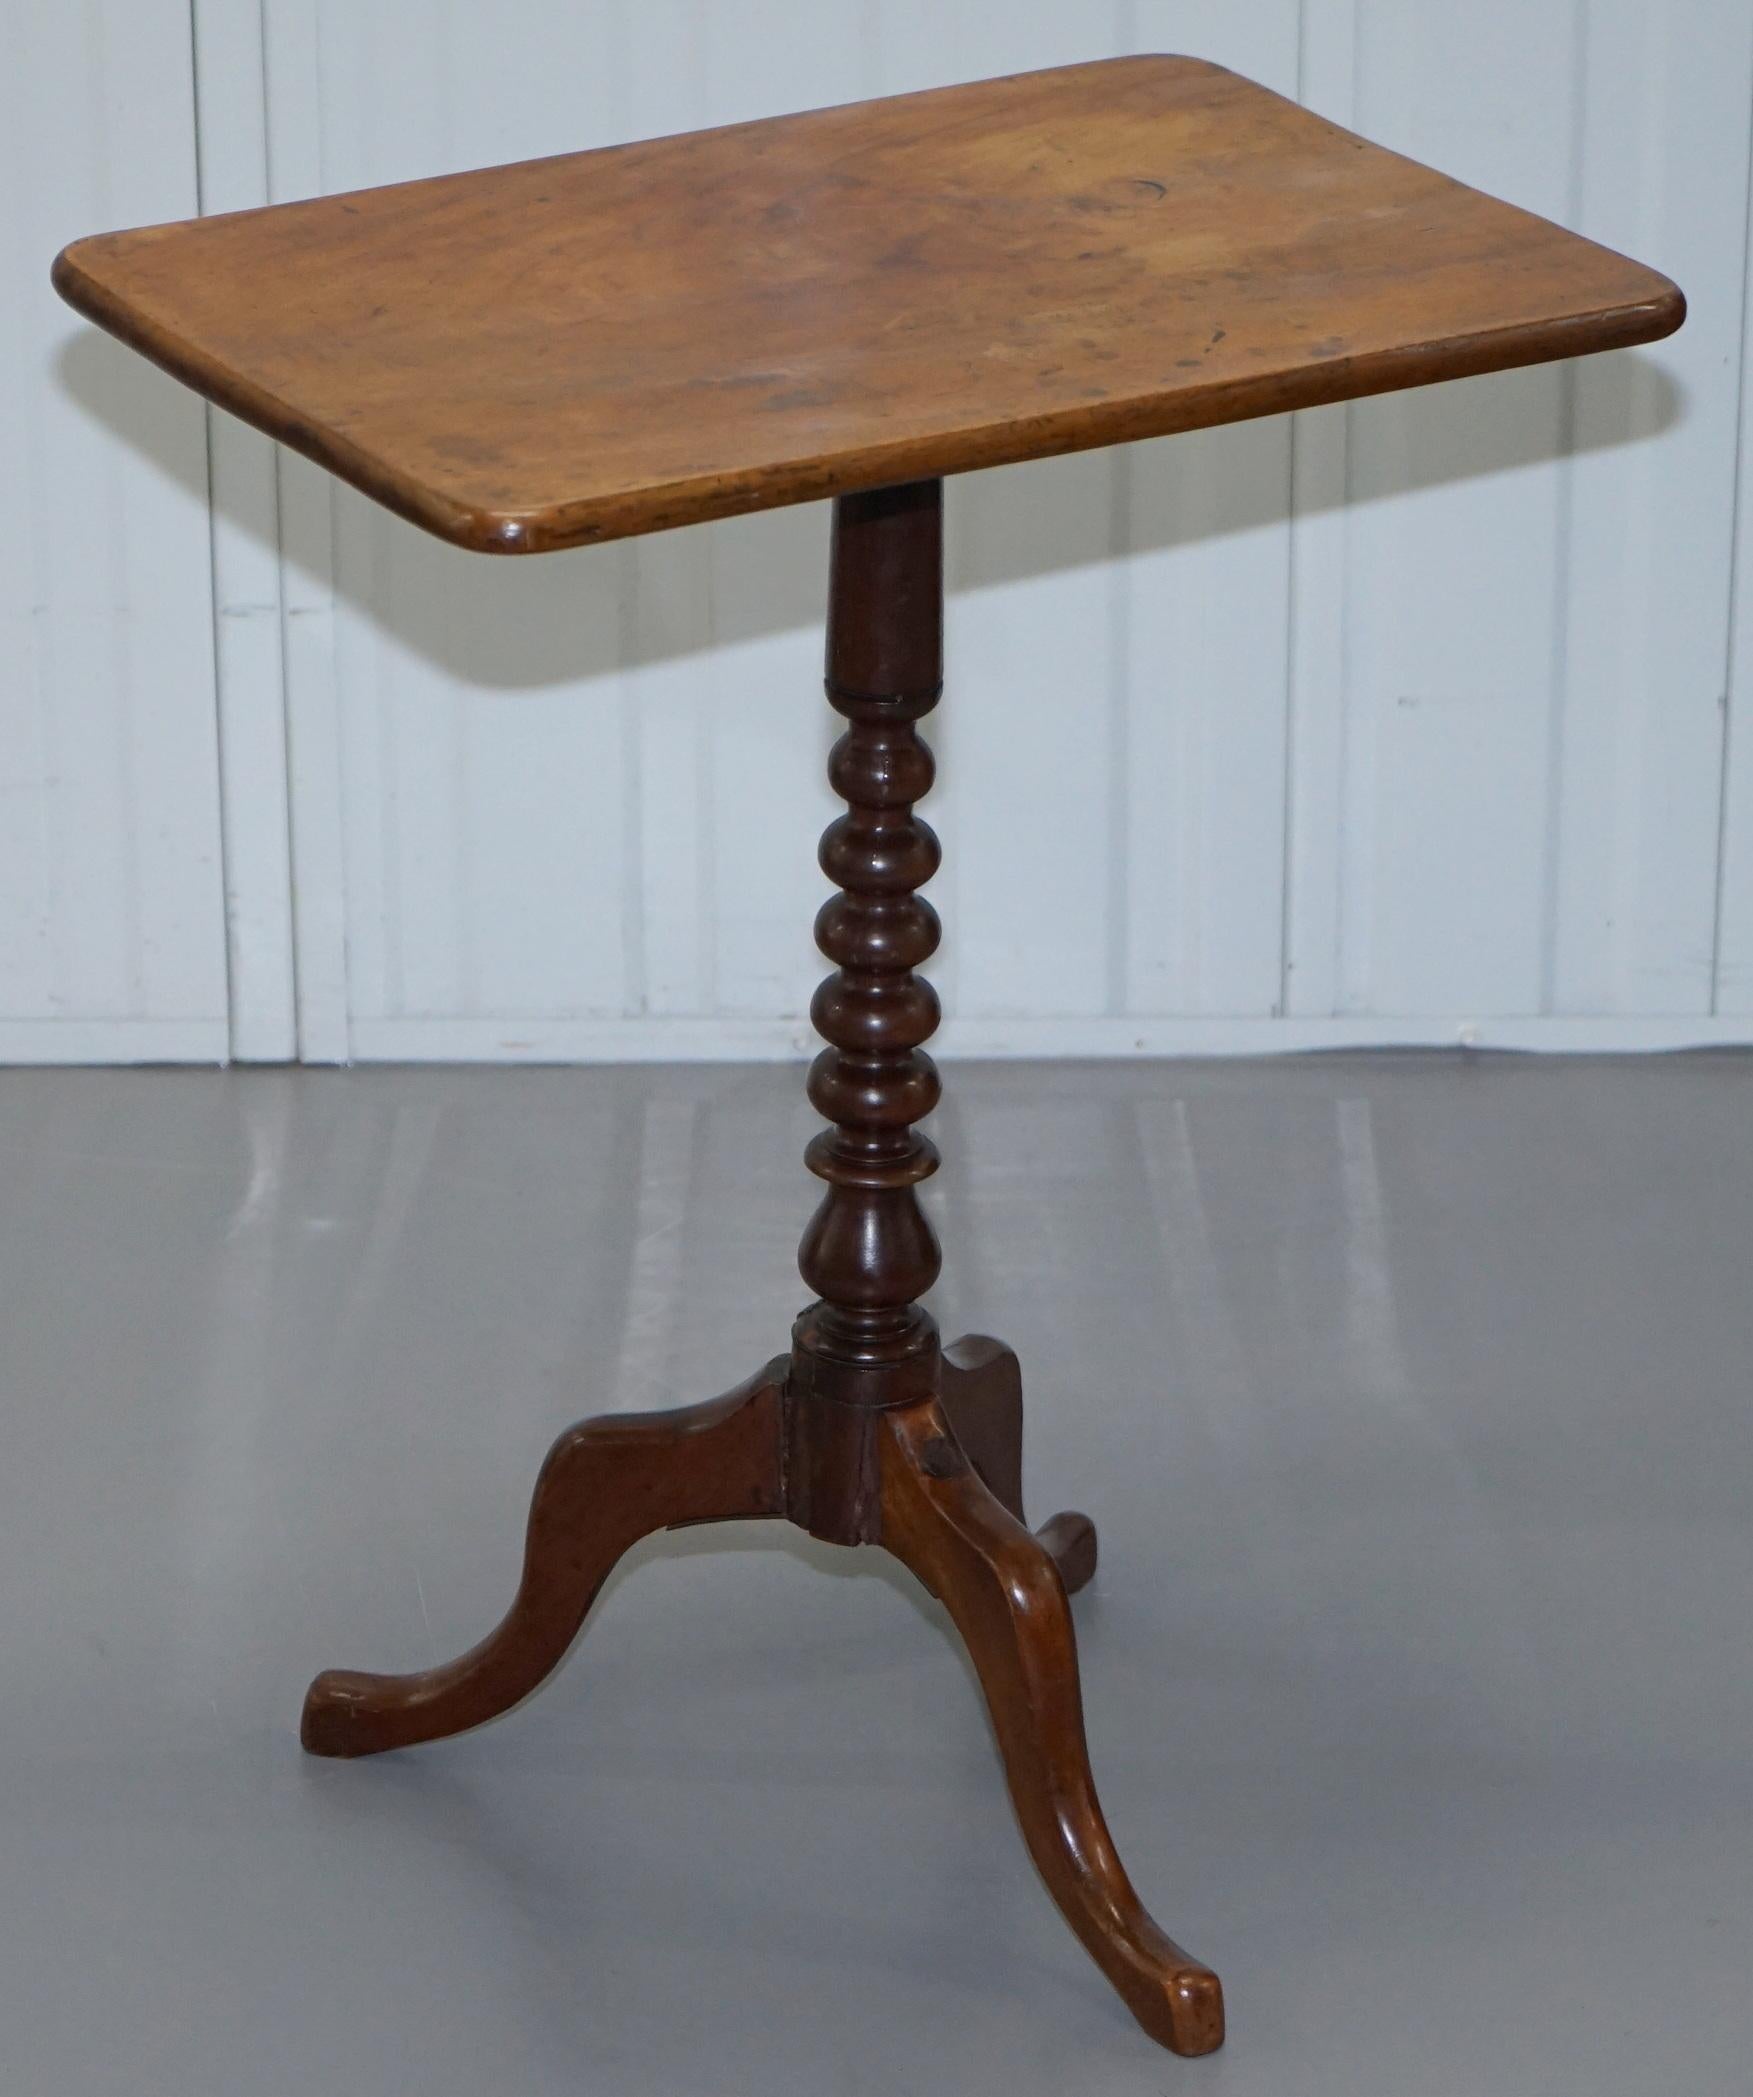 Hand Sawn Georgian Tripod Side Table in Walnut with Tilt Top Function circa 1800 10